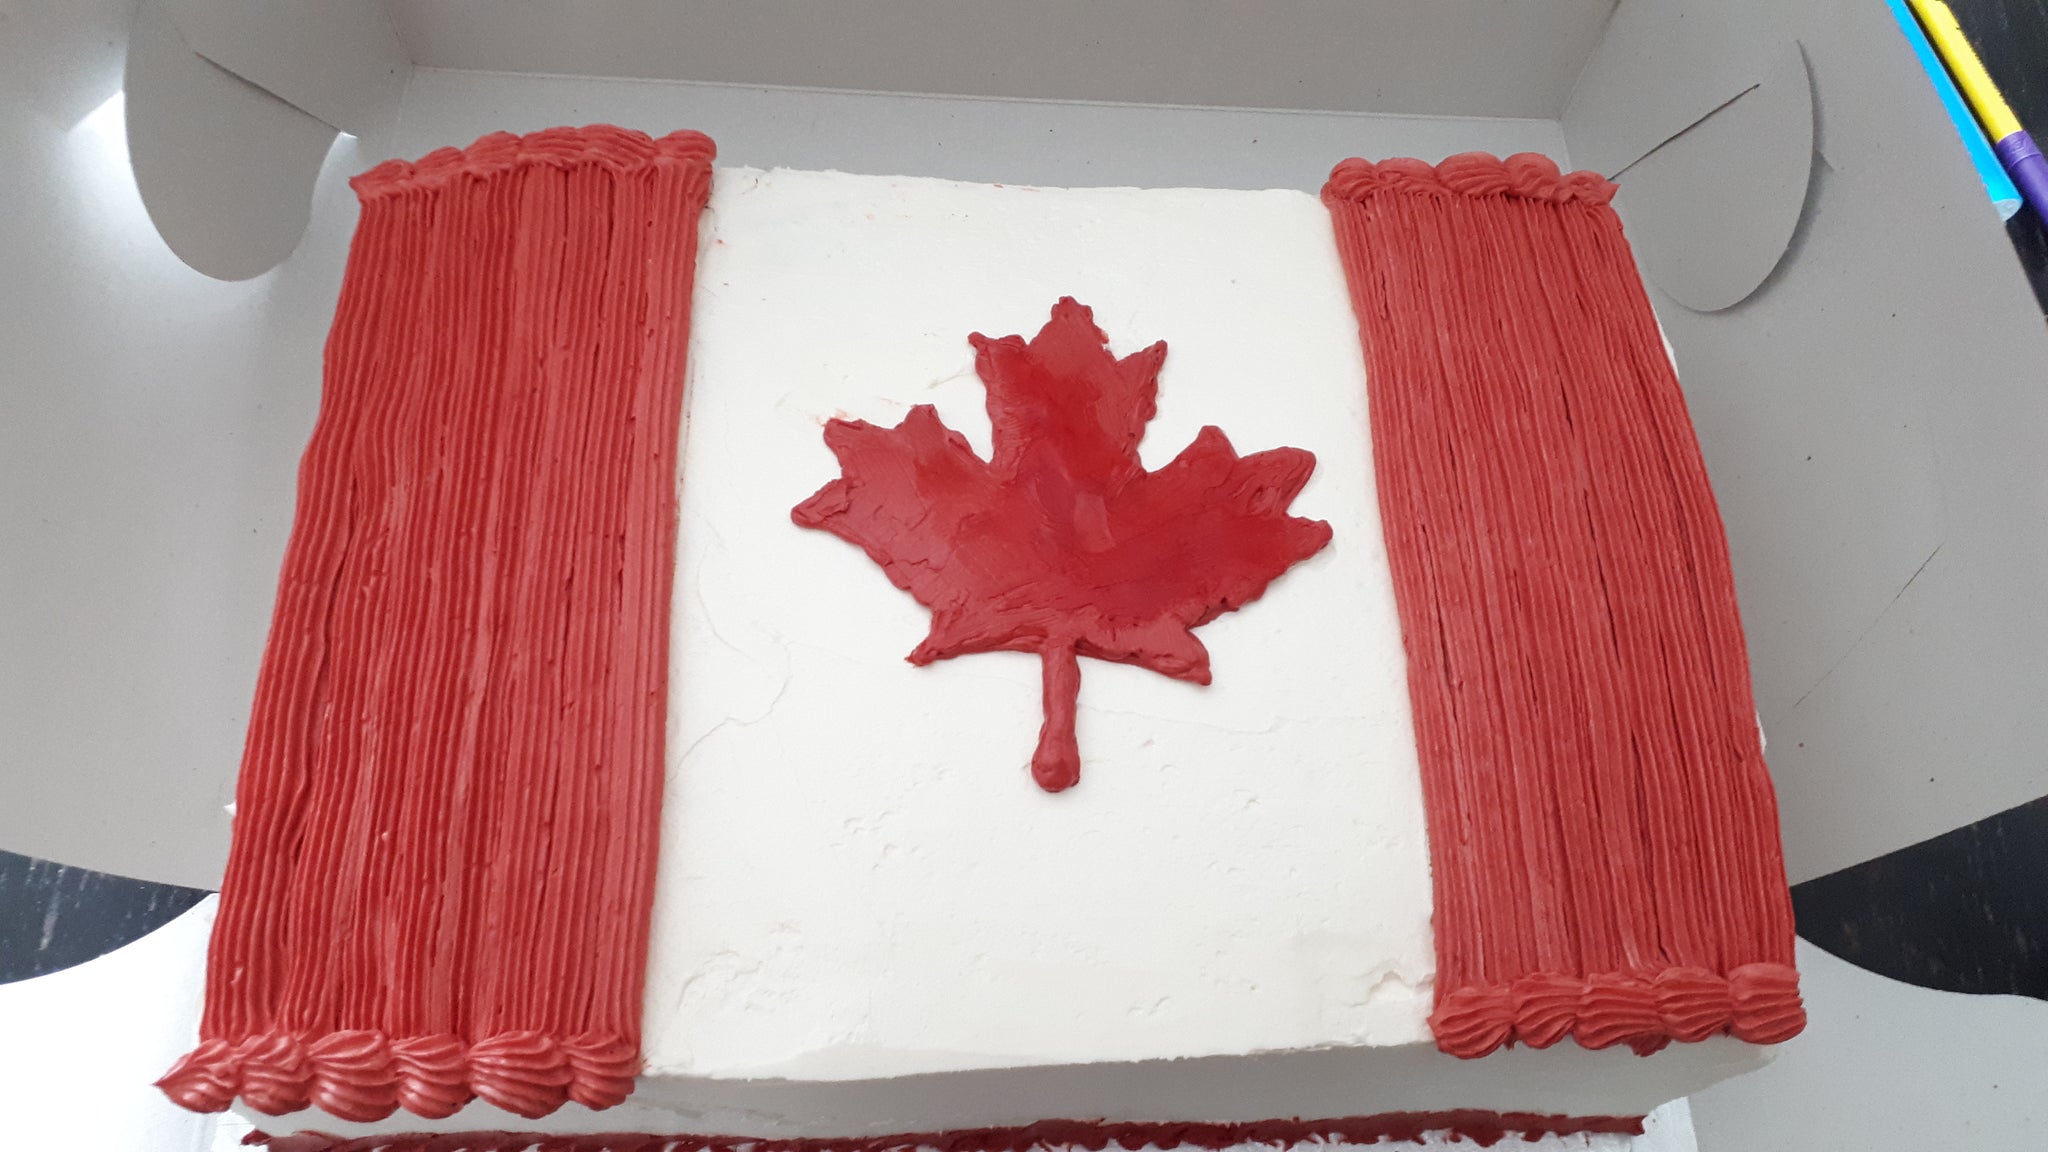 Canada Day Cake - Decorated Cake by Crowning Glory - CakesDecor